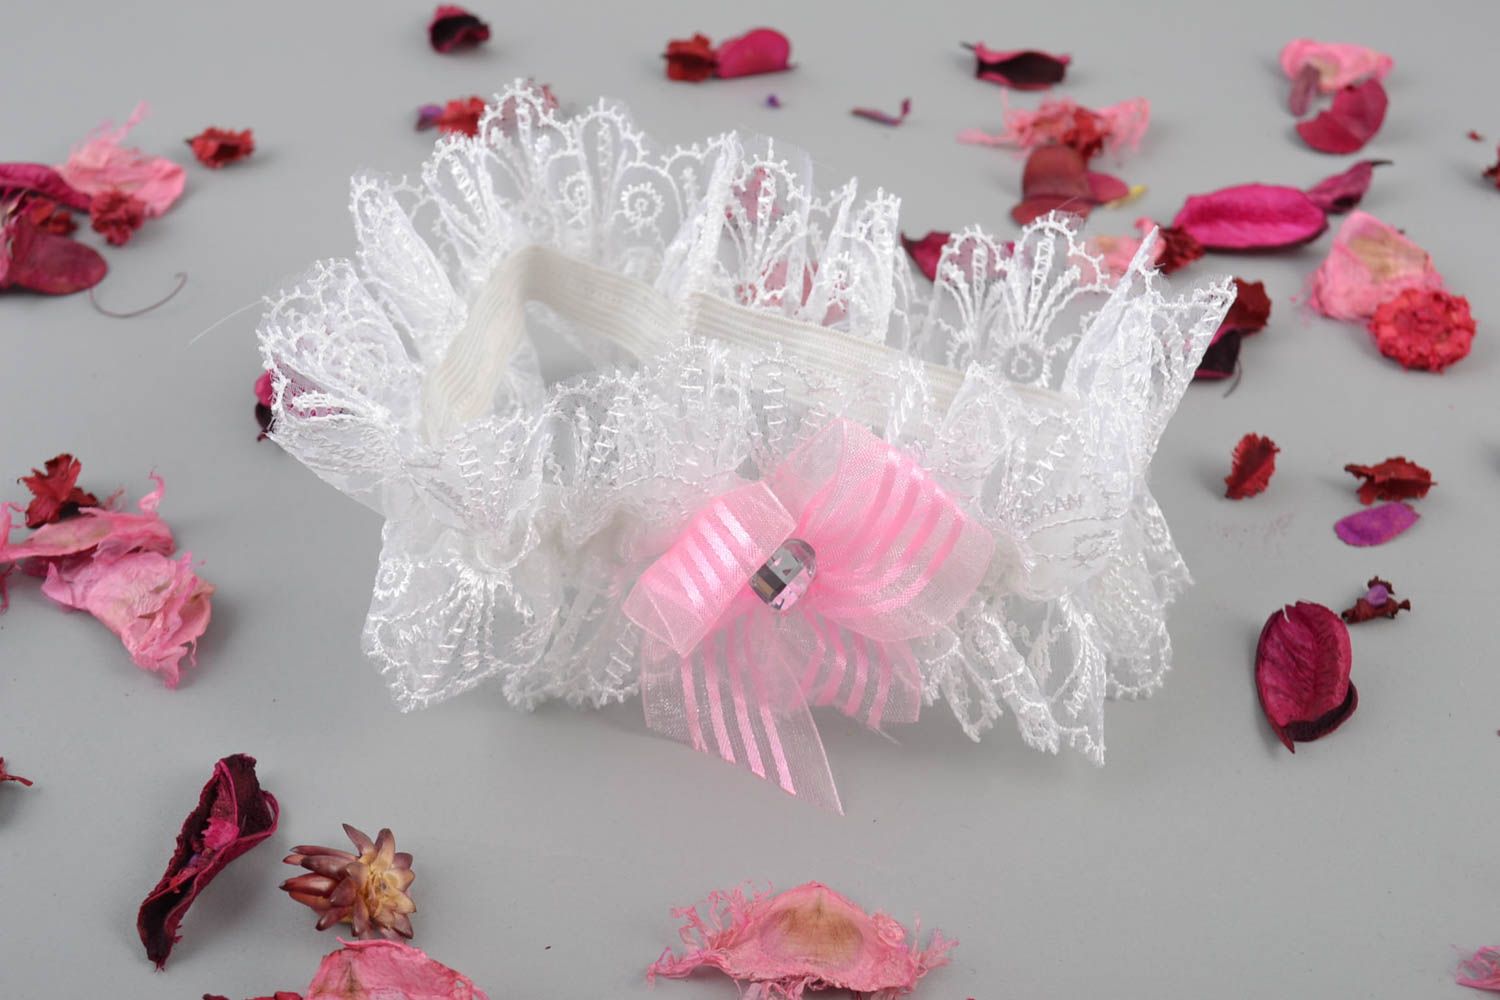 Handmade stylish white and pink beautiful puffy wedding garter for bride photo 1